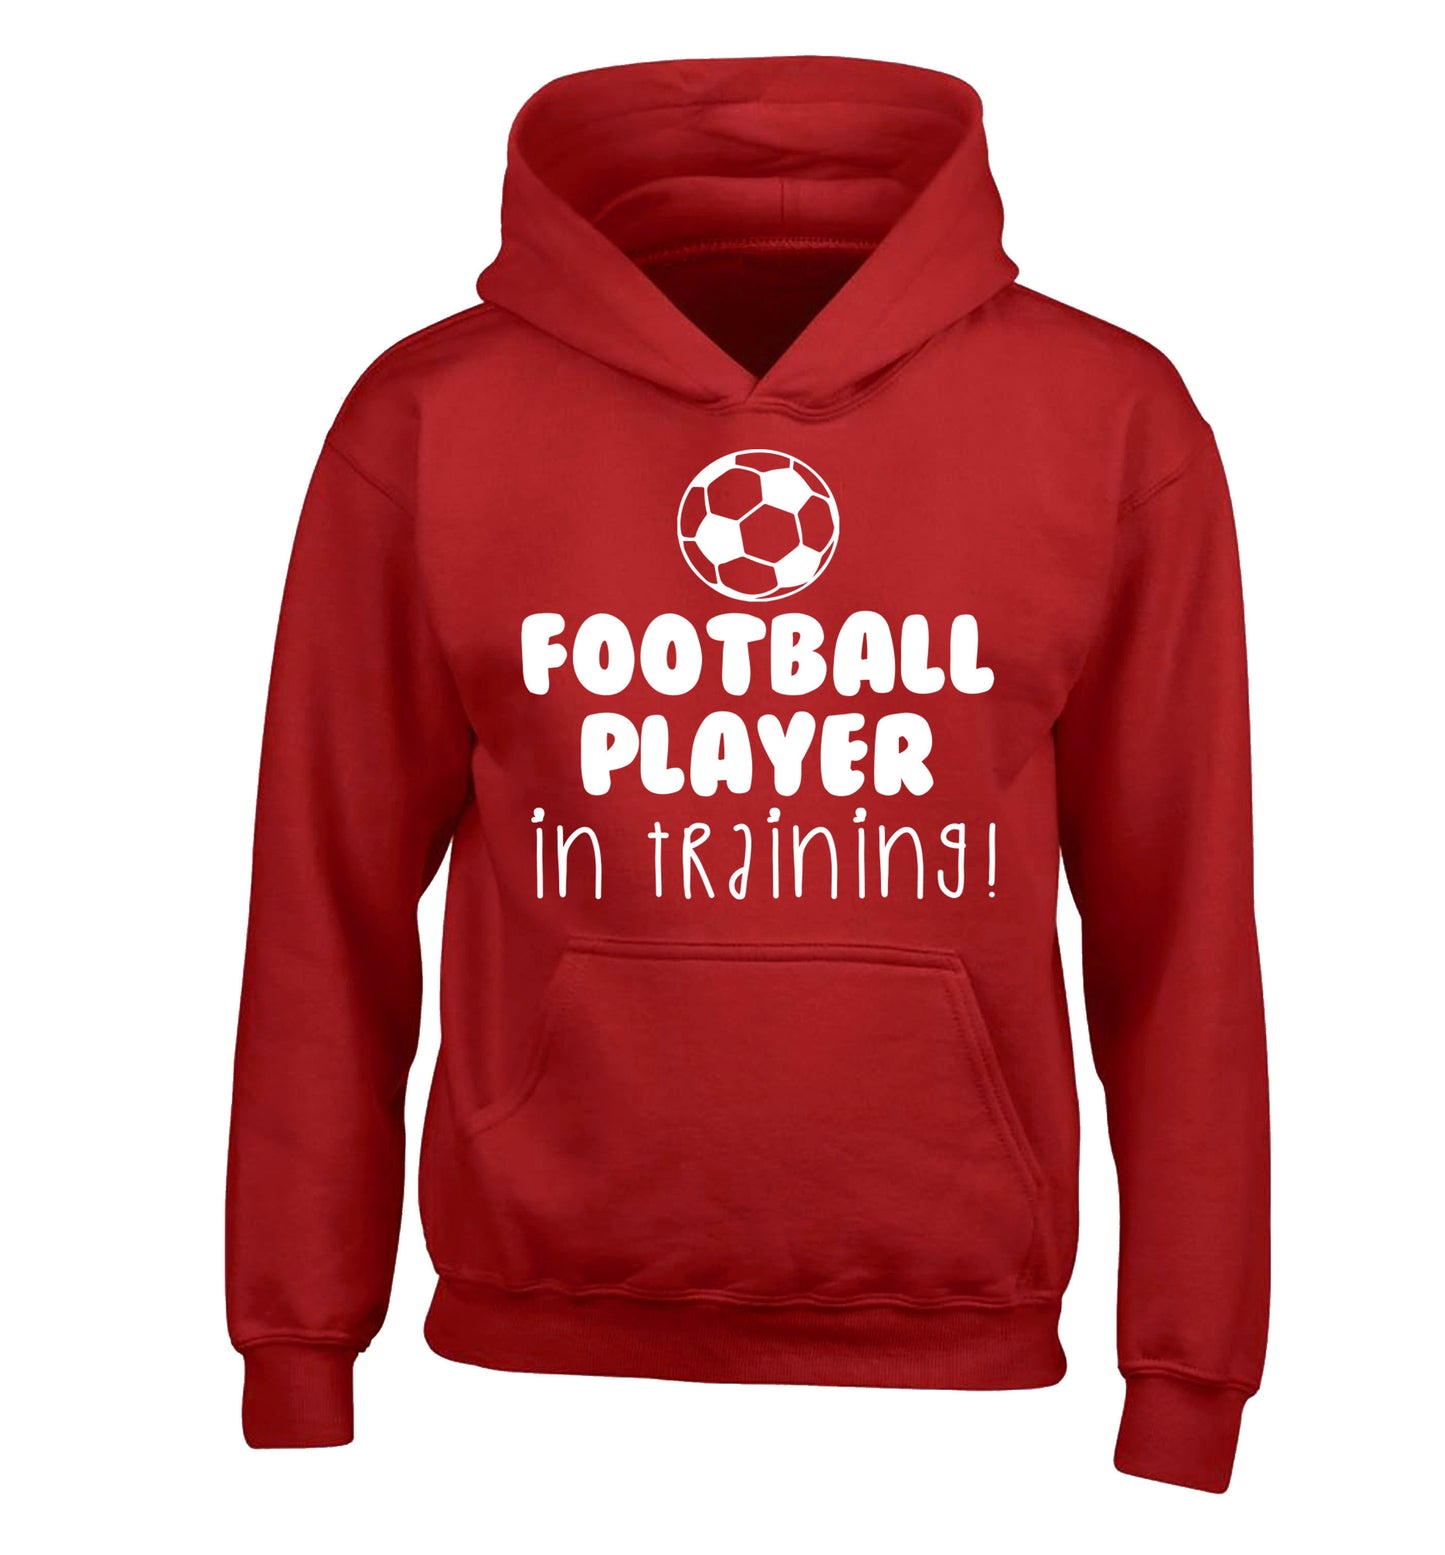 Football player in training children's red hoodie 12-14 Years